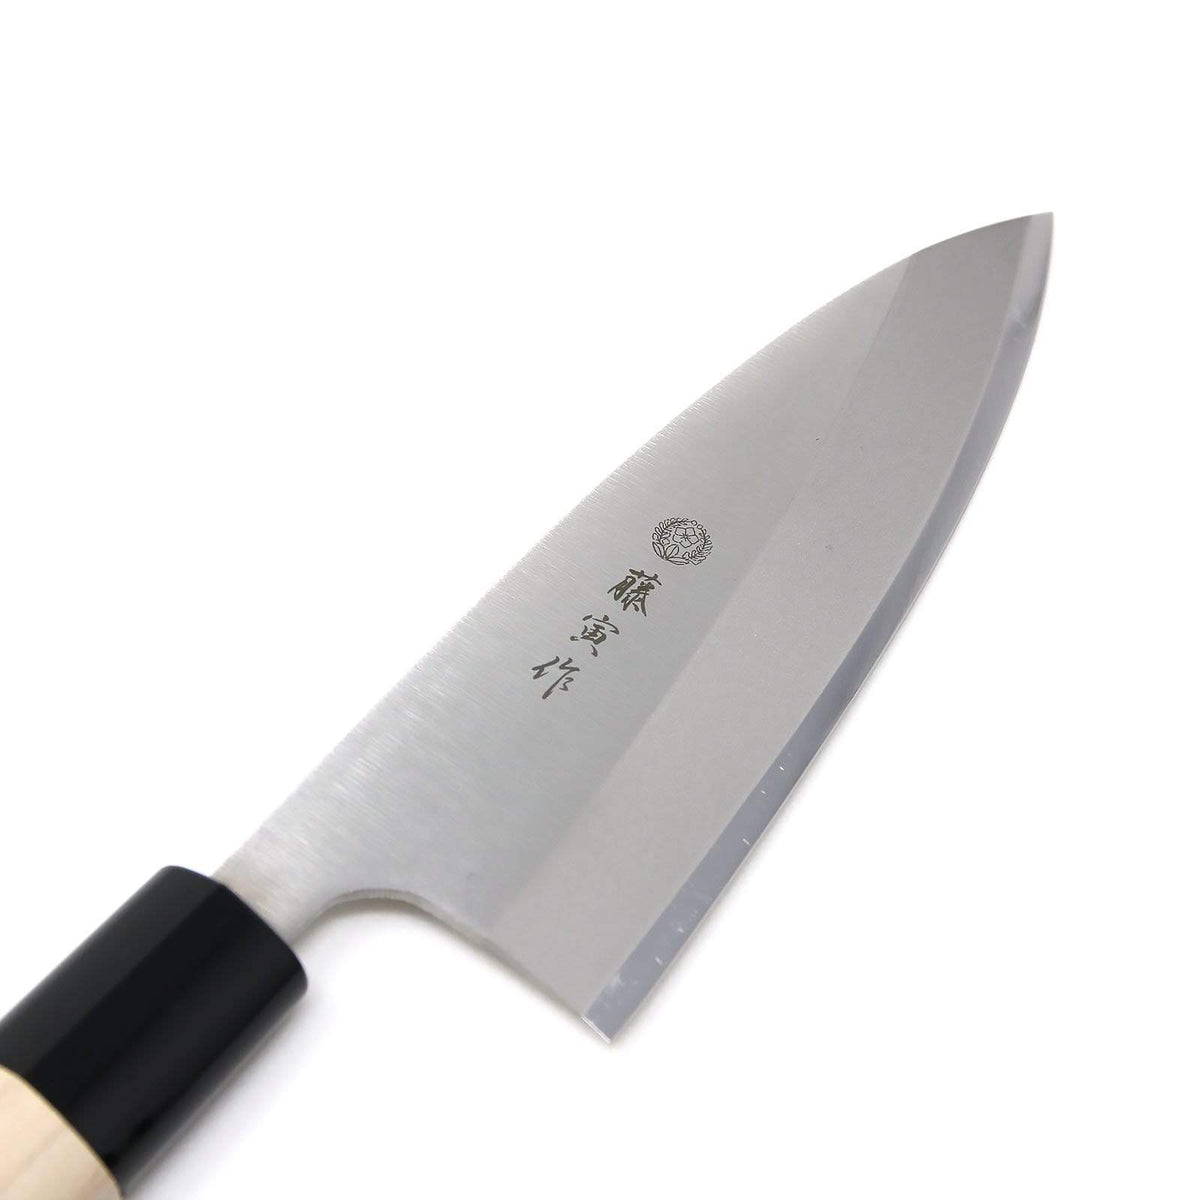 Tojiro Fujitora MV Deba Knife with Wood Handle Deba Knives